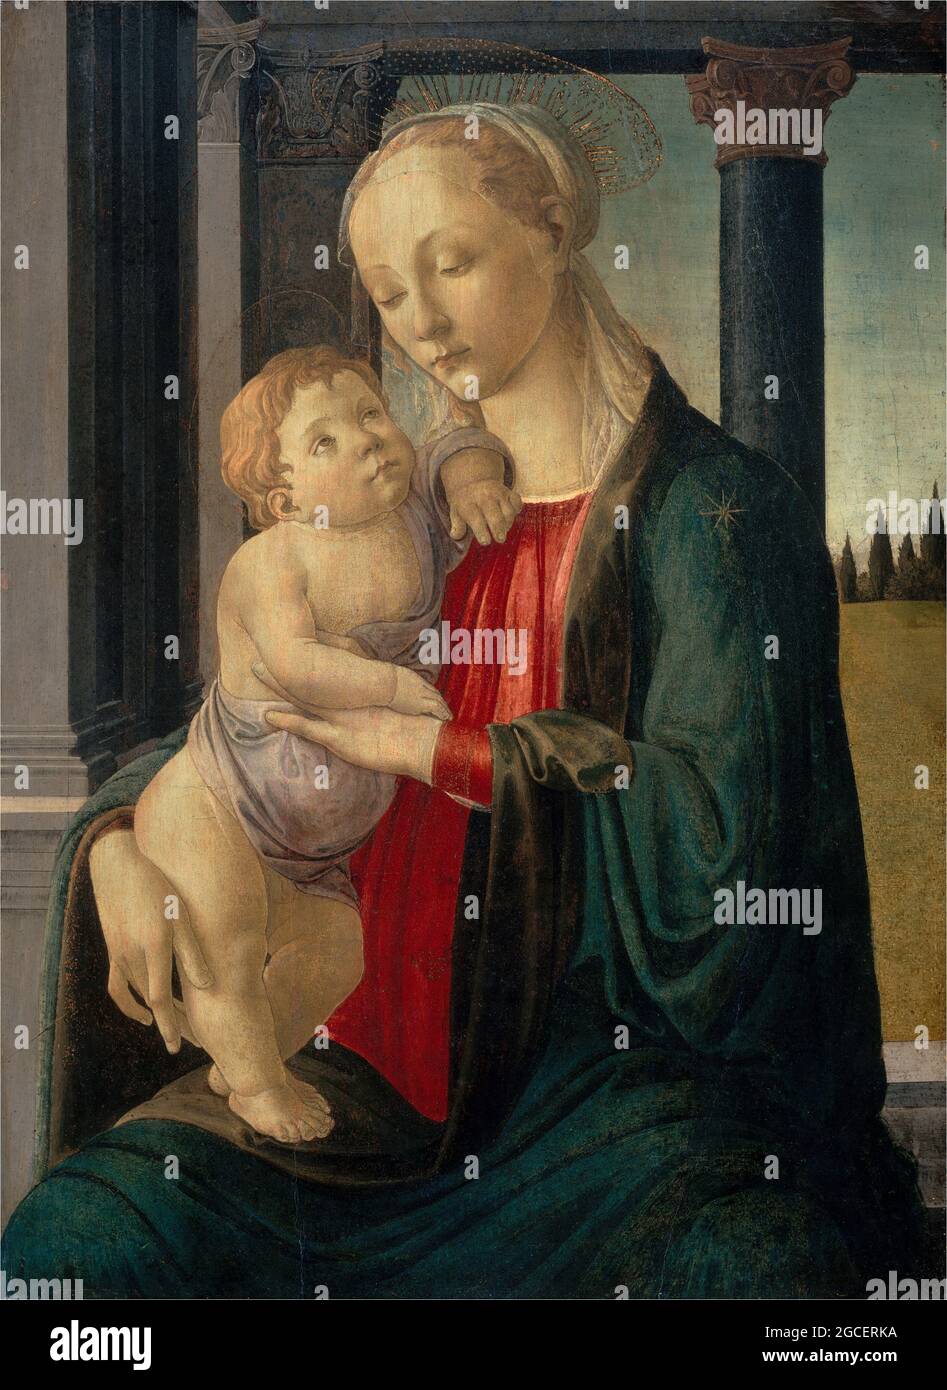 Title: Madonna and Child Creator: Sandro Botticelli Date: c. 1470 Medium: tempera on panel Dimension: 74.5 x 54.5 cm Location: National Gallery Stock Photo